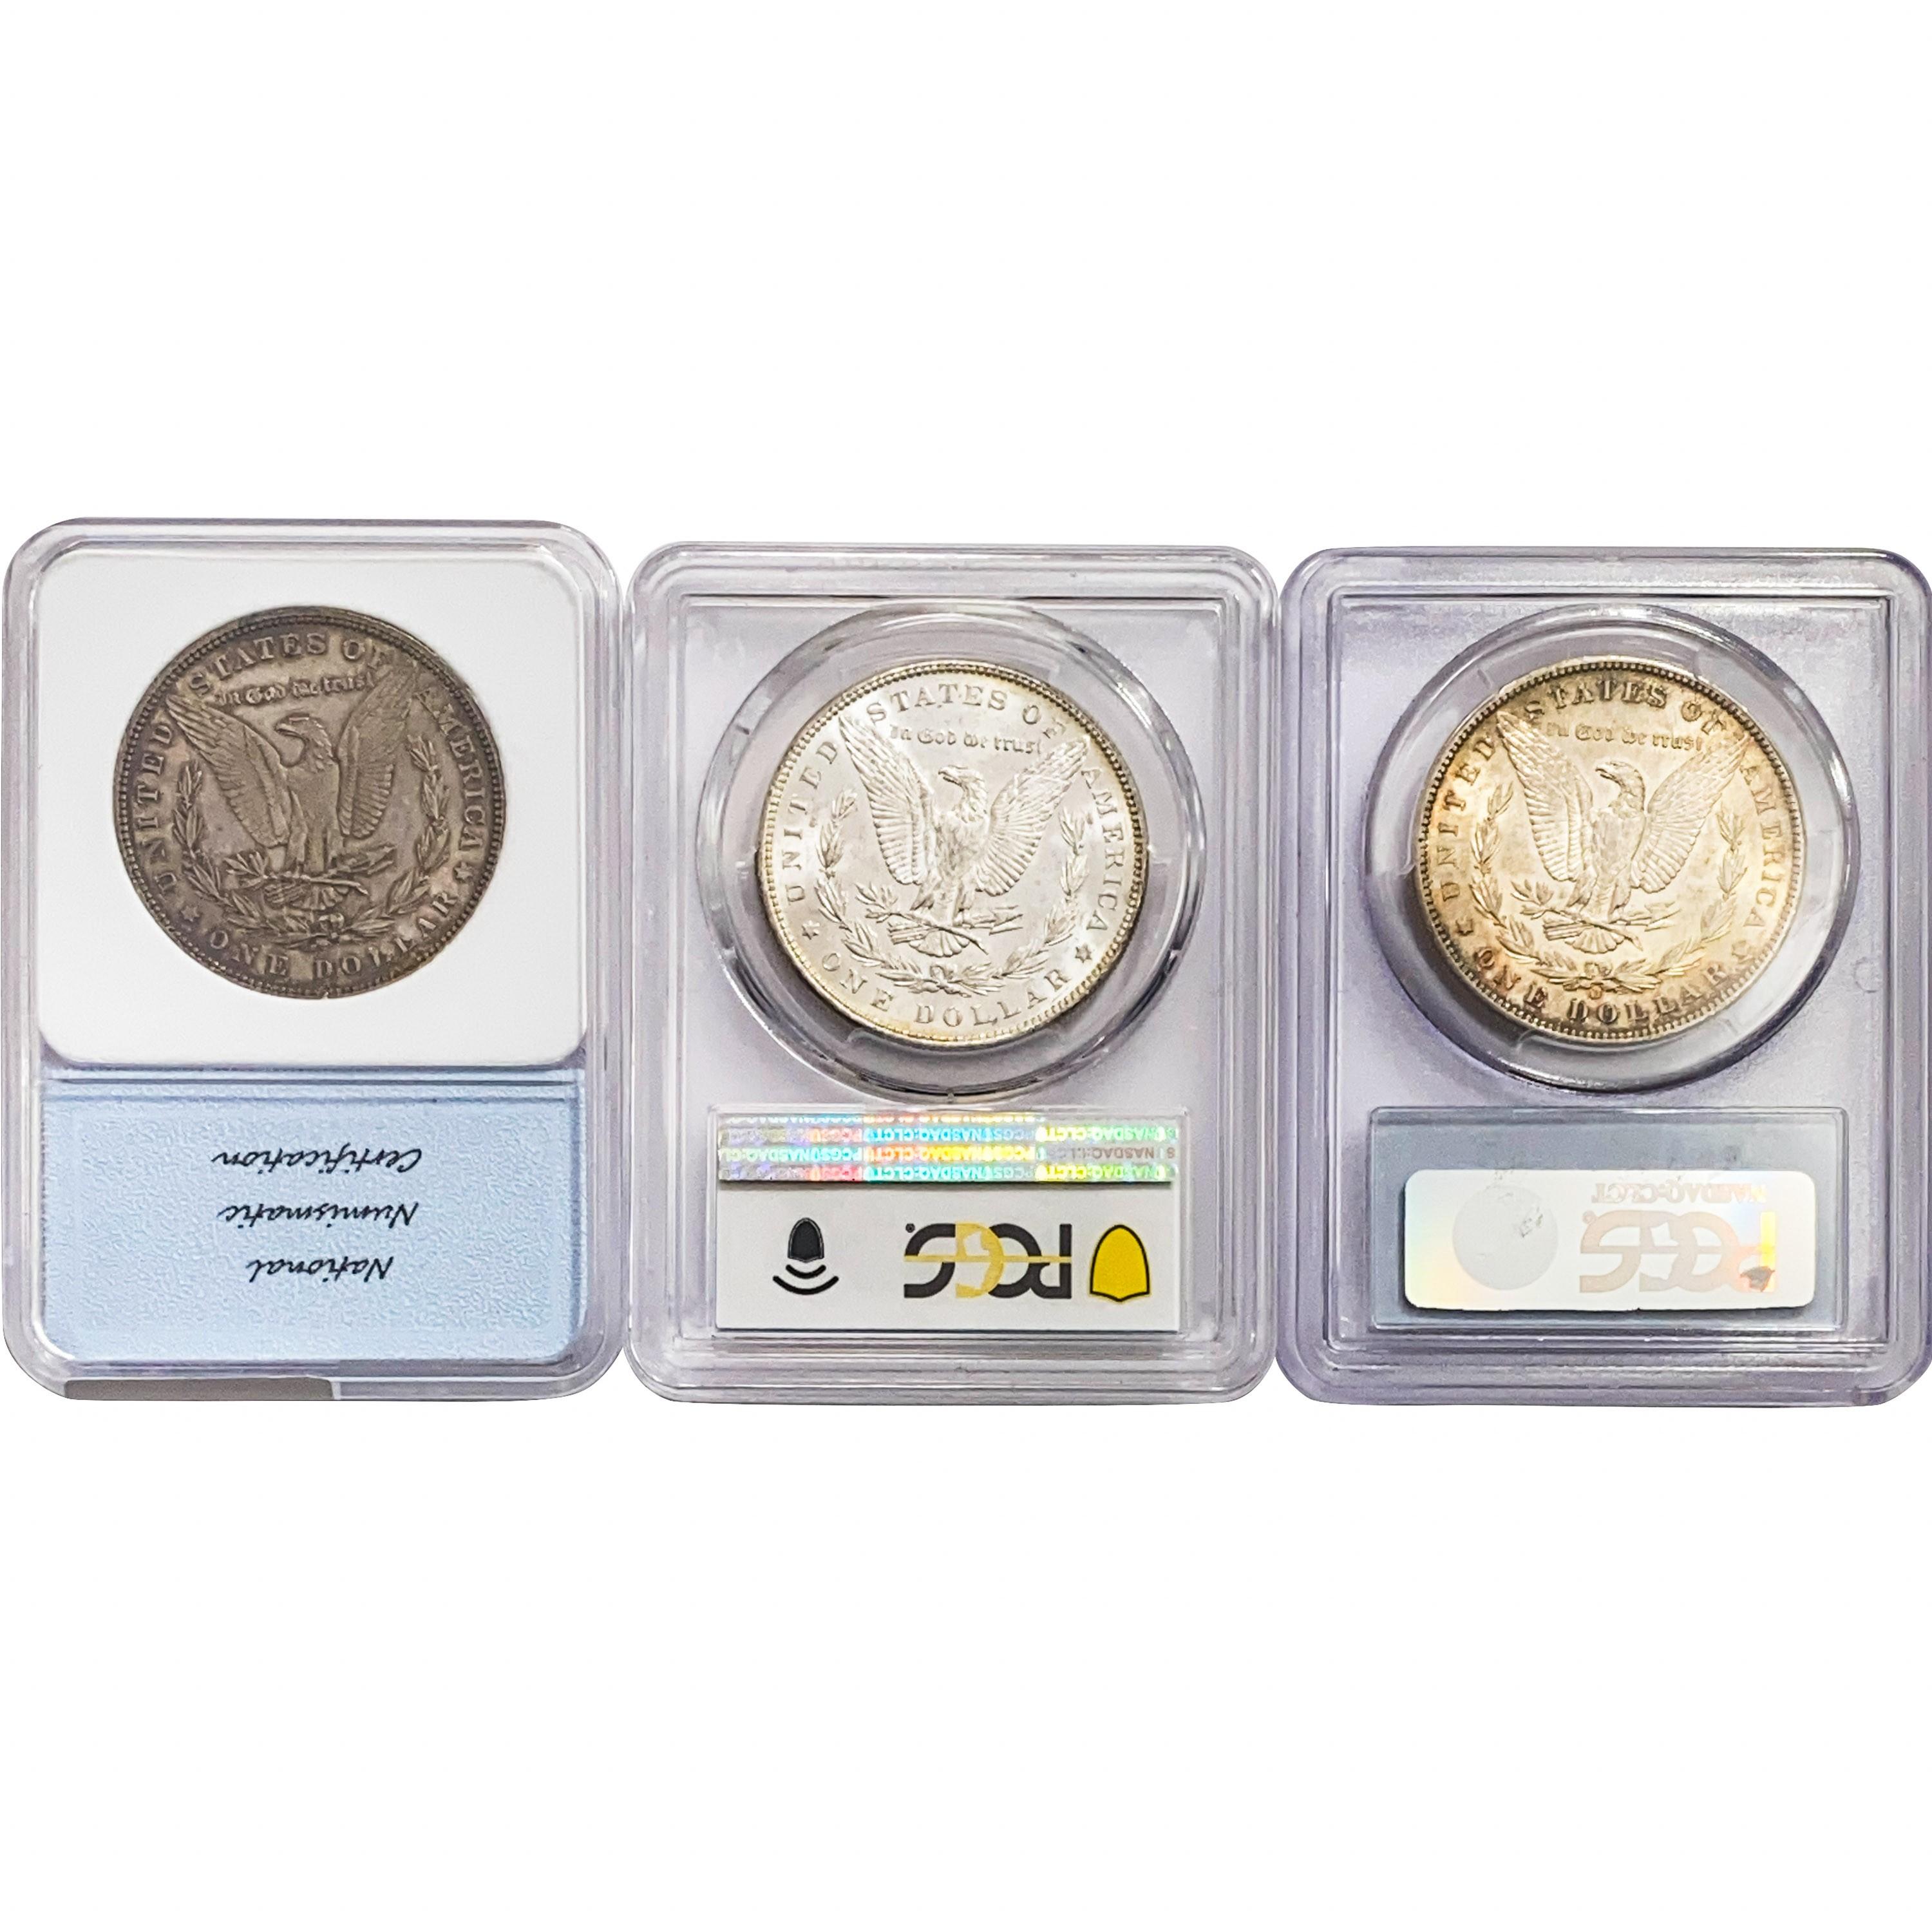 1879-1899 UNC Graded Morgan Silver Dollars [3 Coin